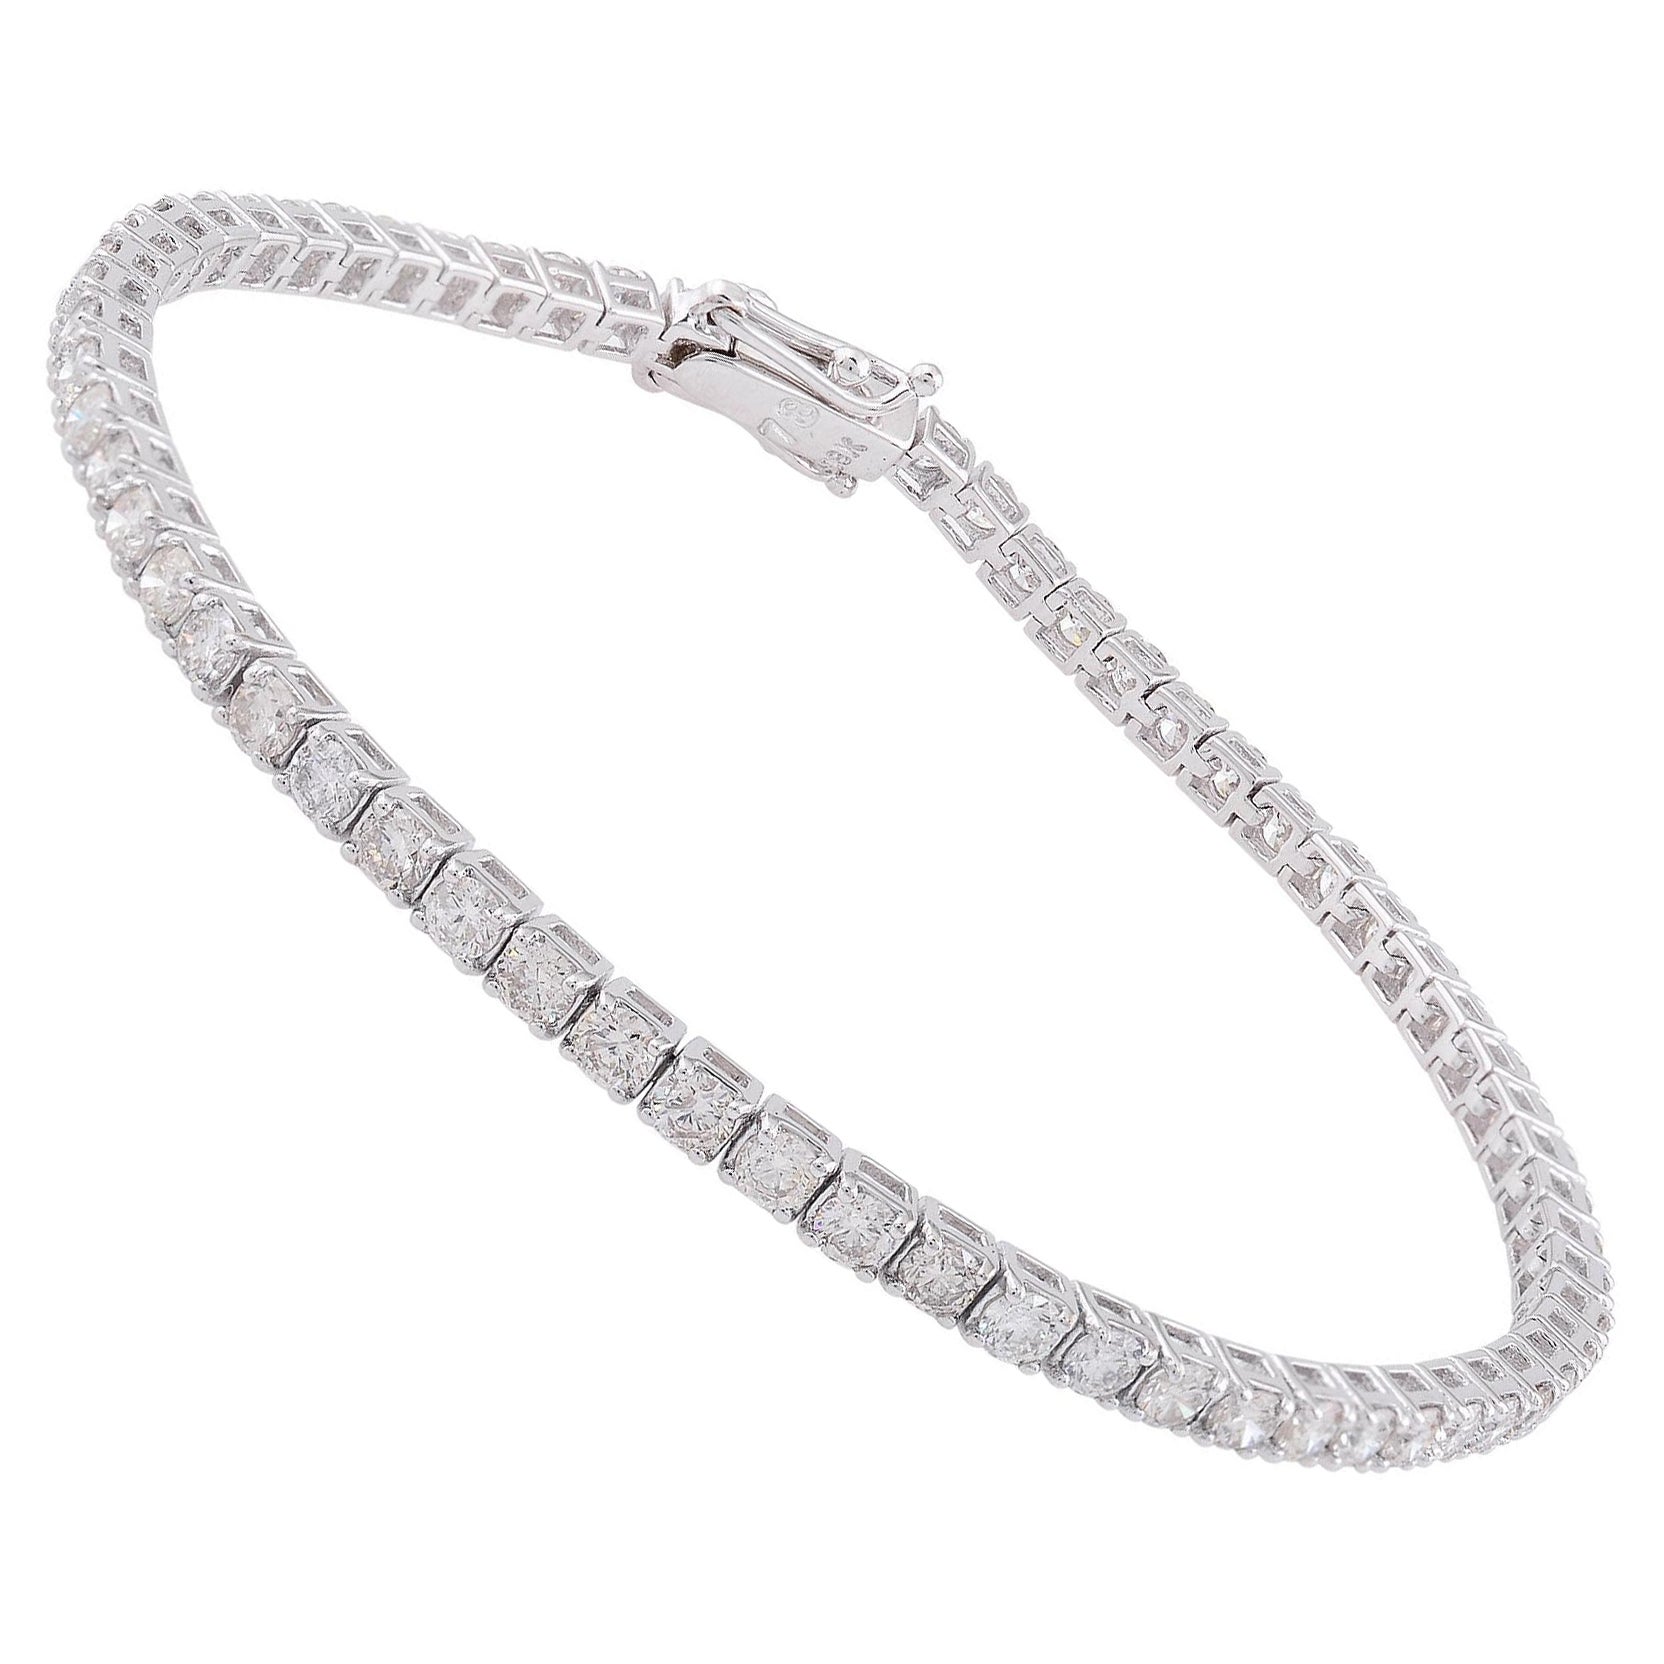 3.80 Carat SI Clarity HI Color Diamond Tennis Bracelet 14k White Gold Jewelry For Sale